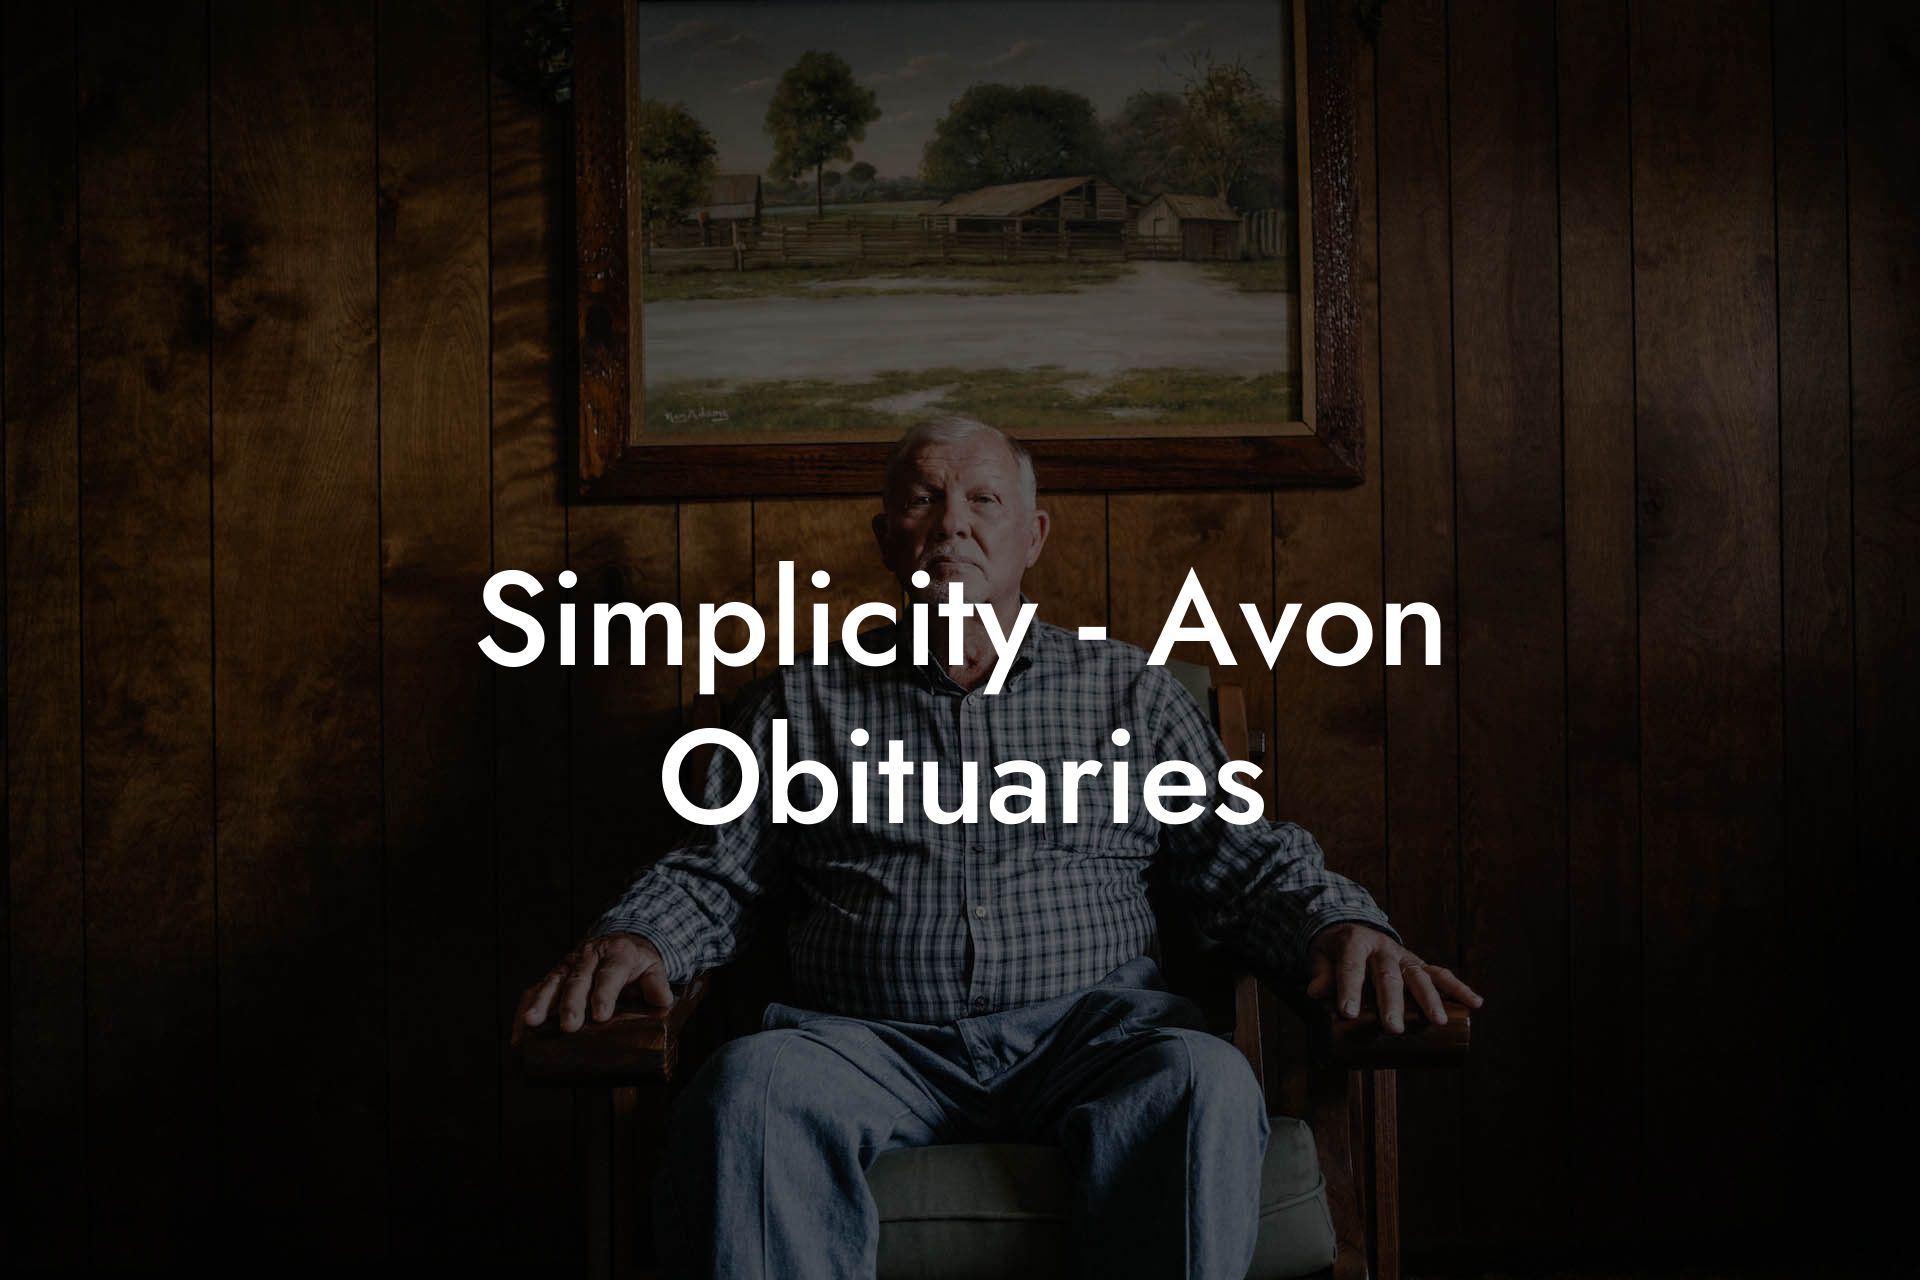 Simplicity - Avon Obituaries